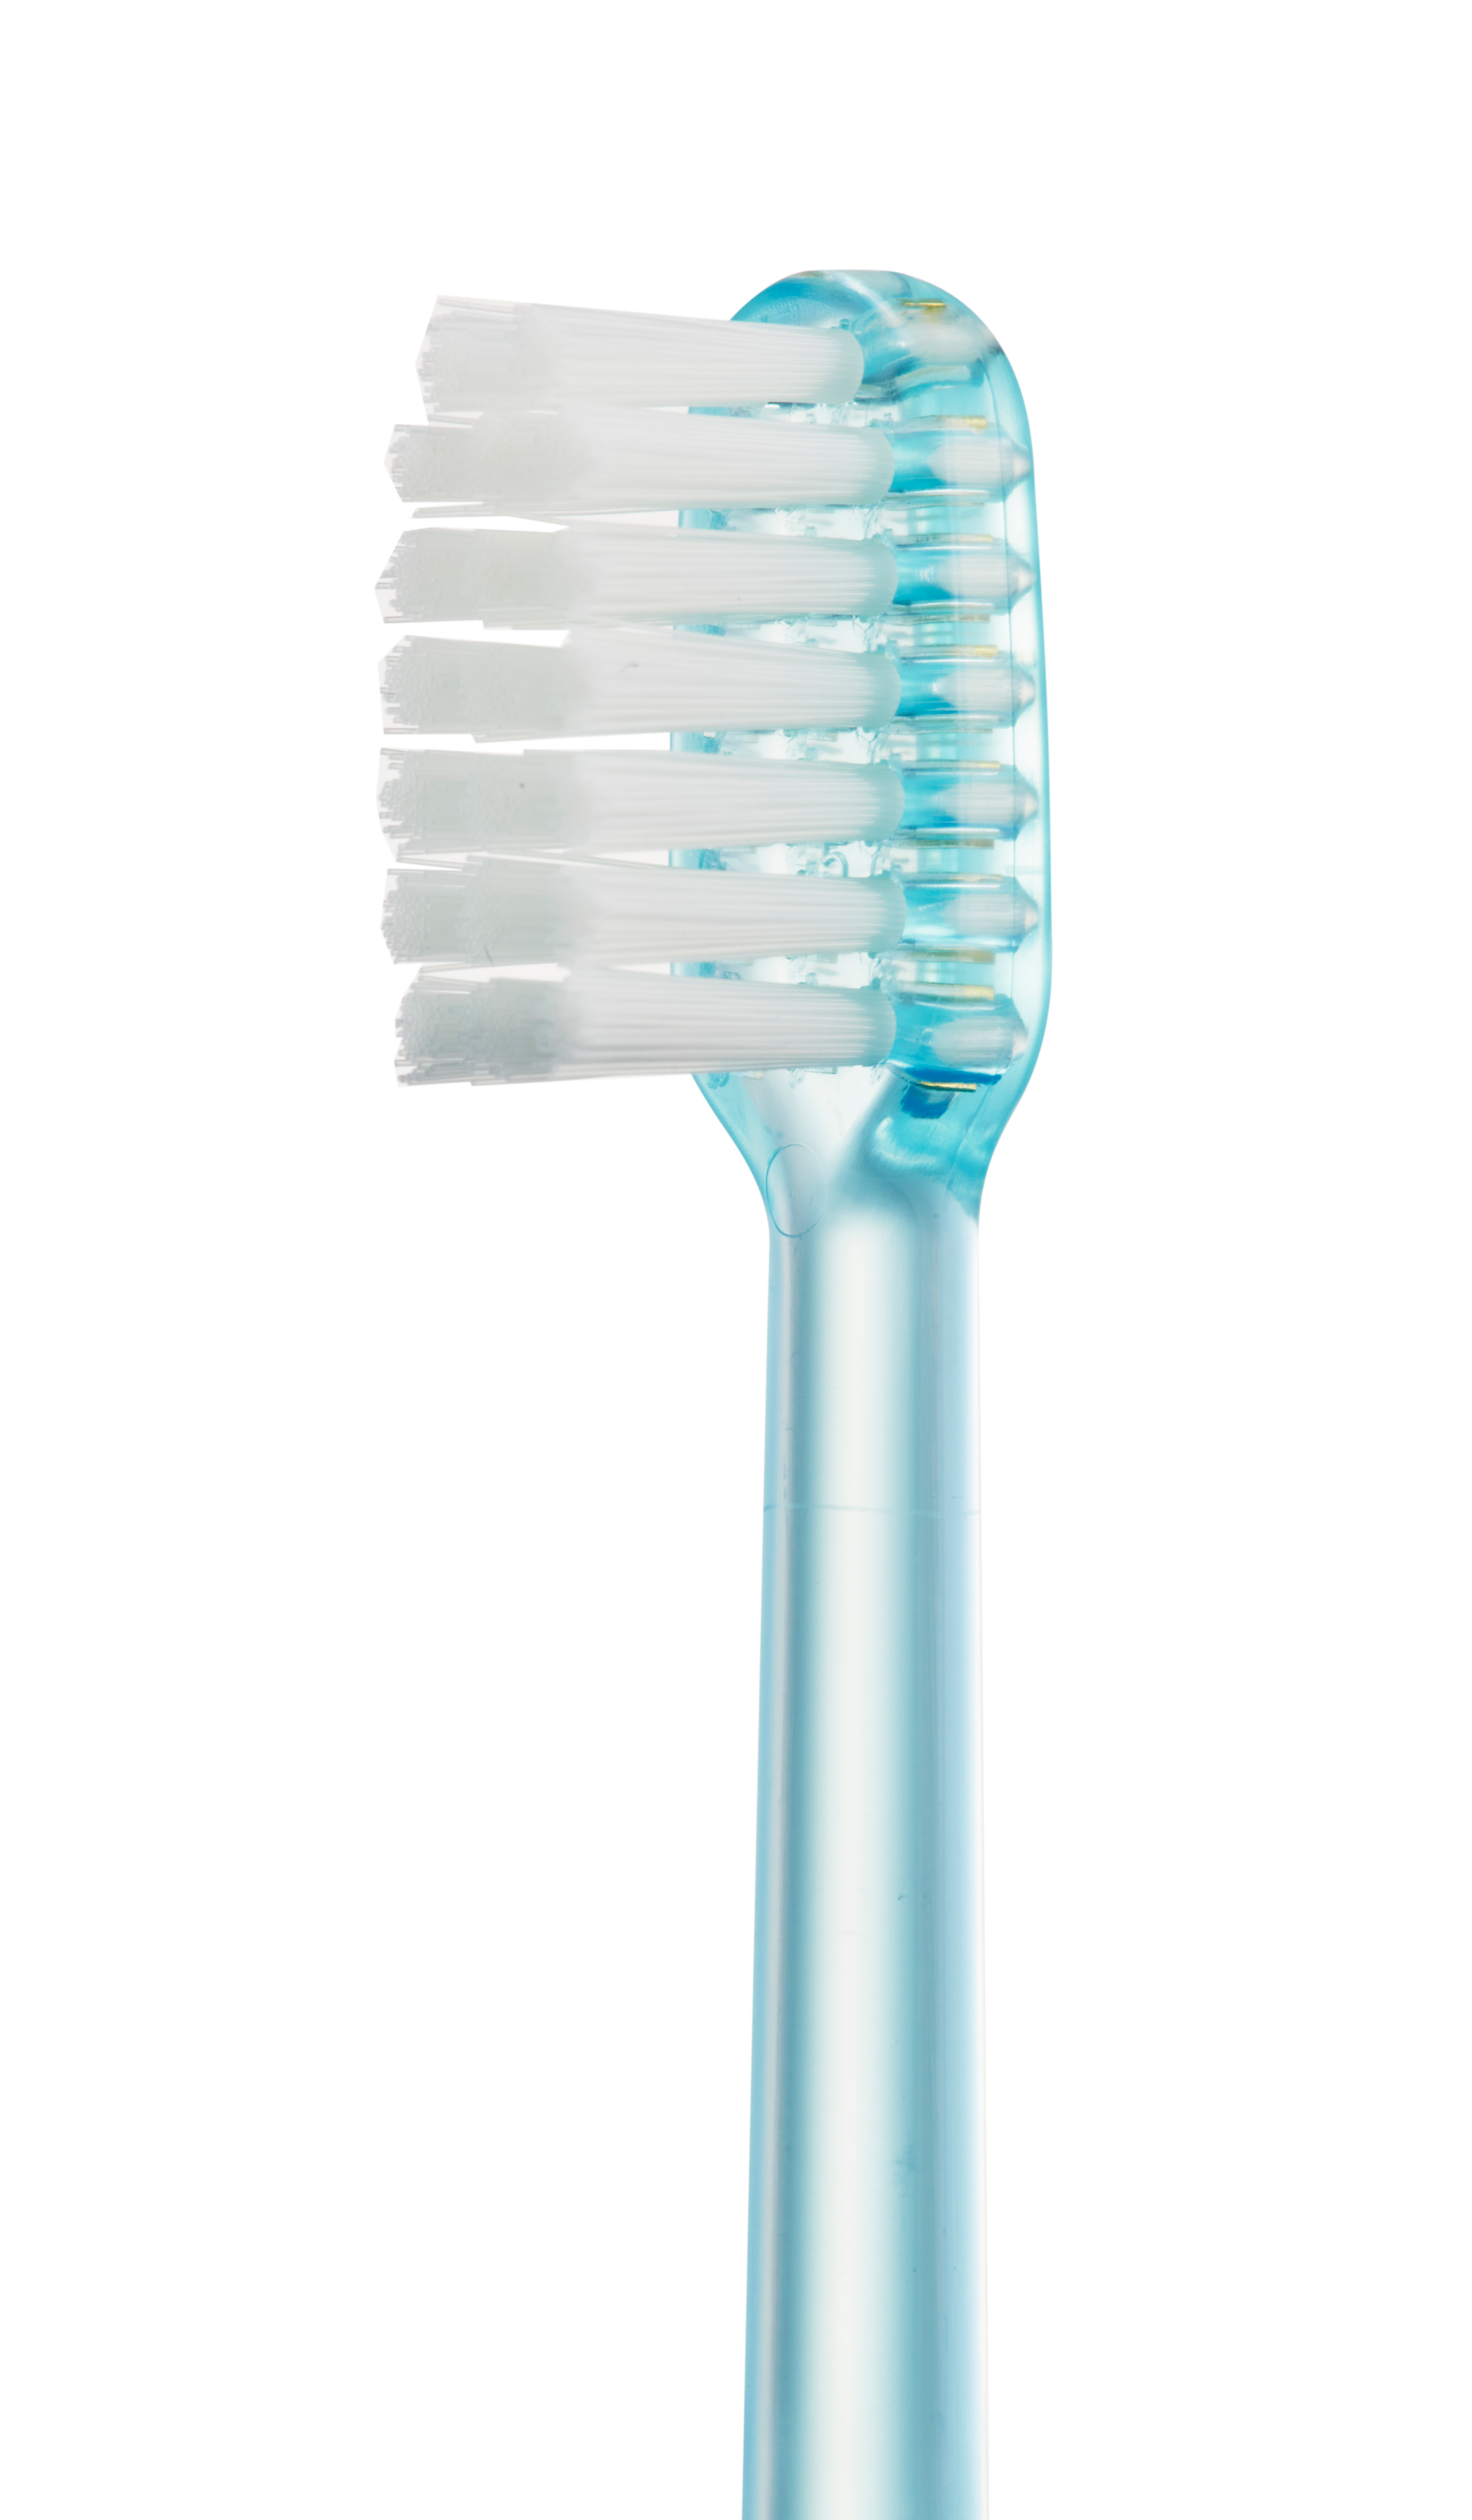 APADENT® KIDS SOFT Toothbrush